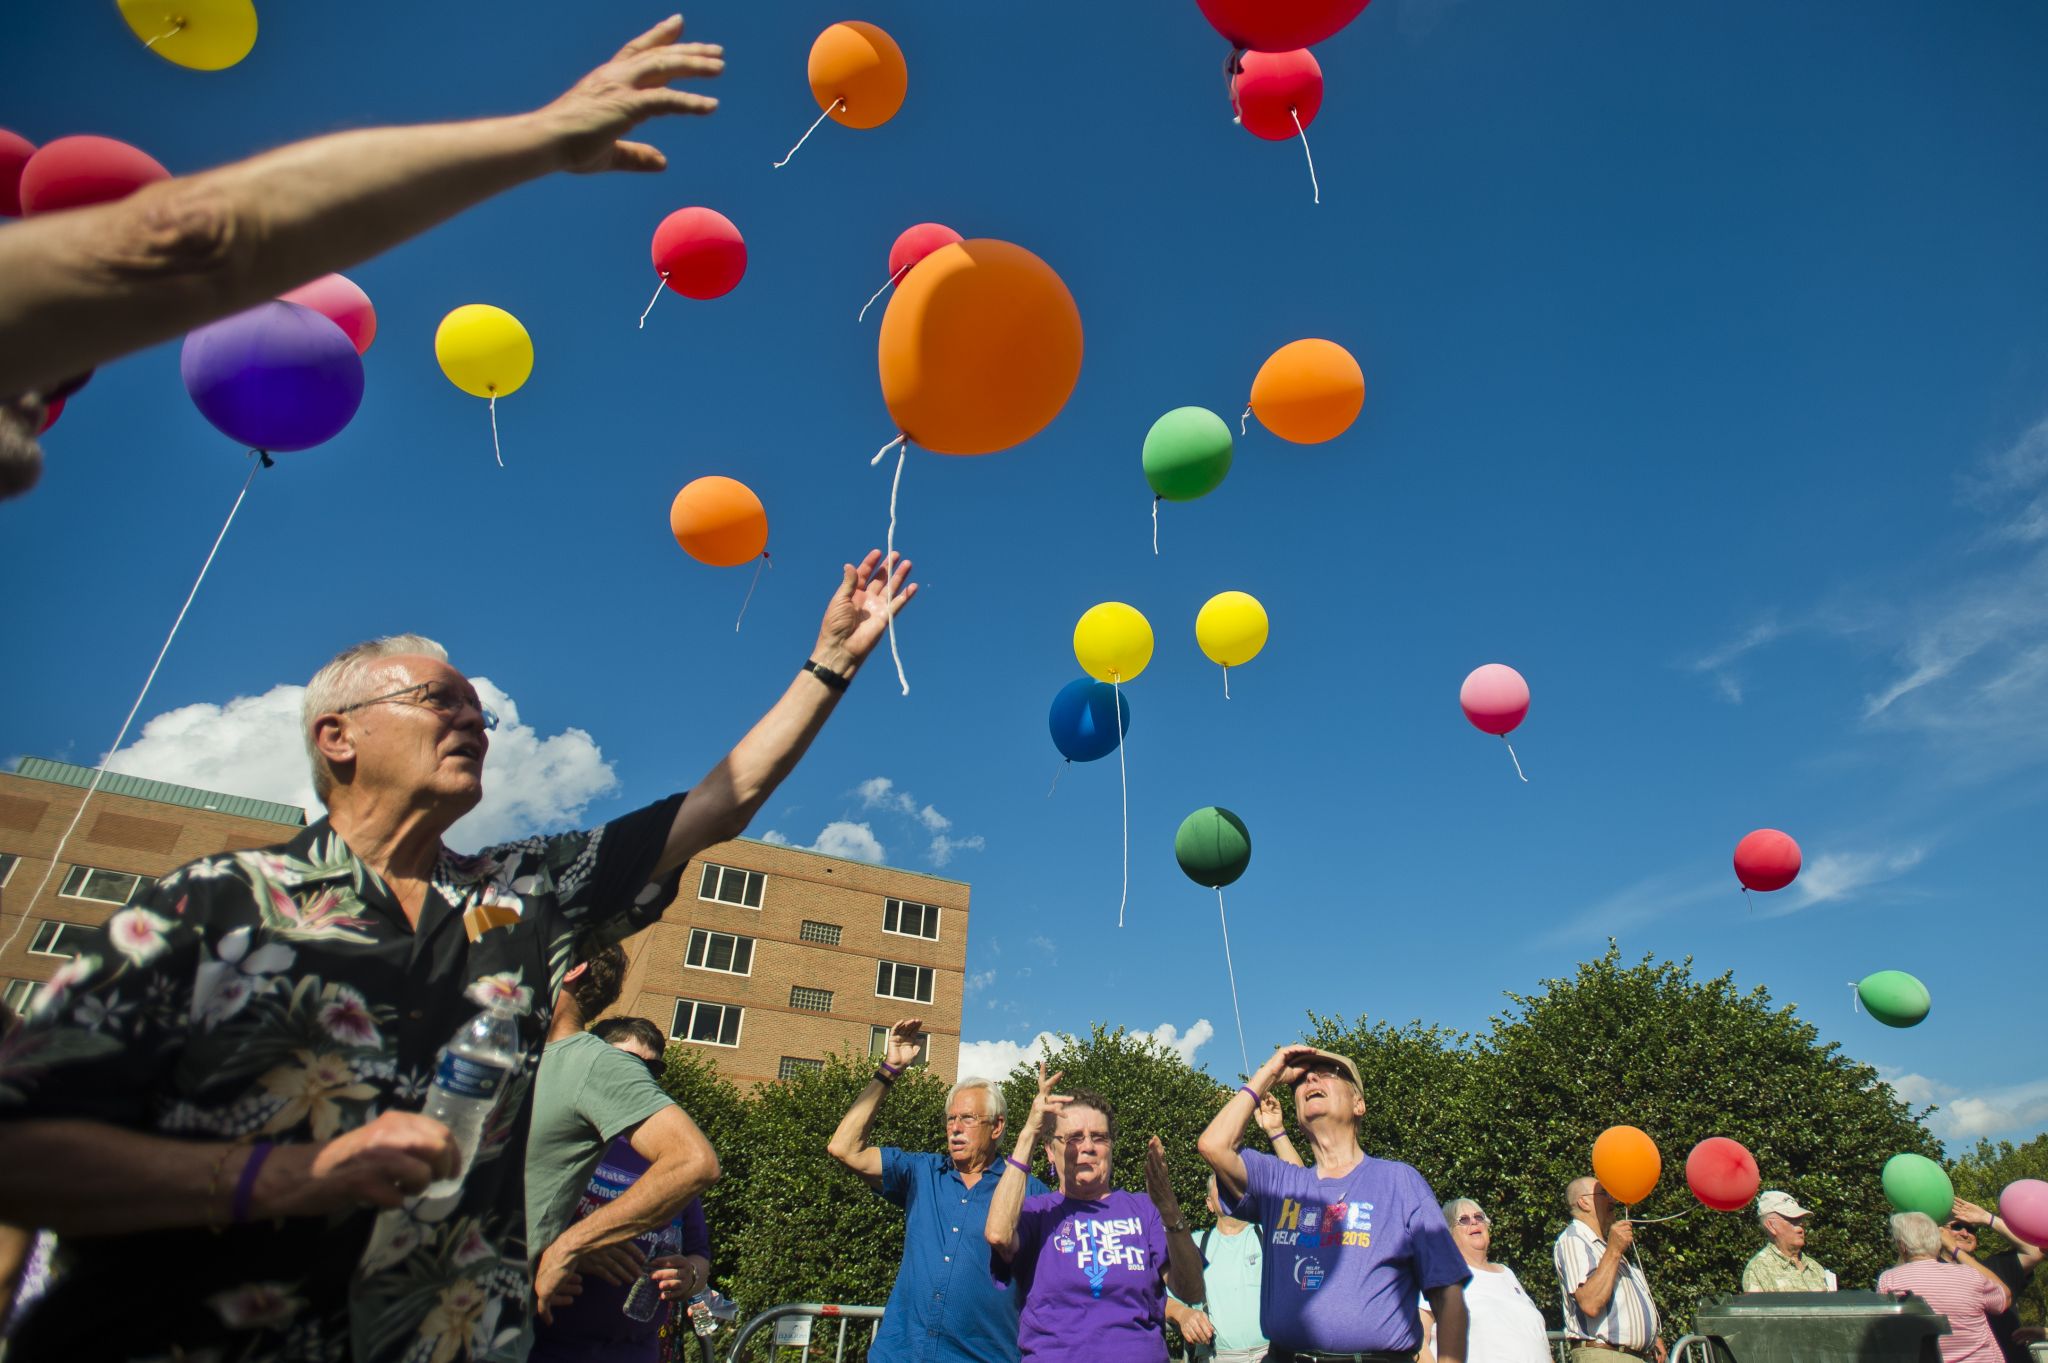 Cancer survivors release balloons in celebration